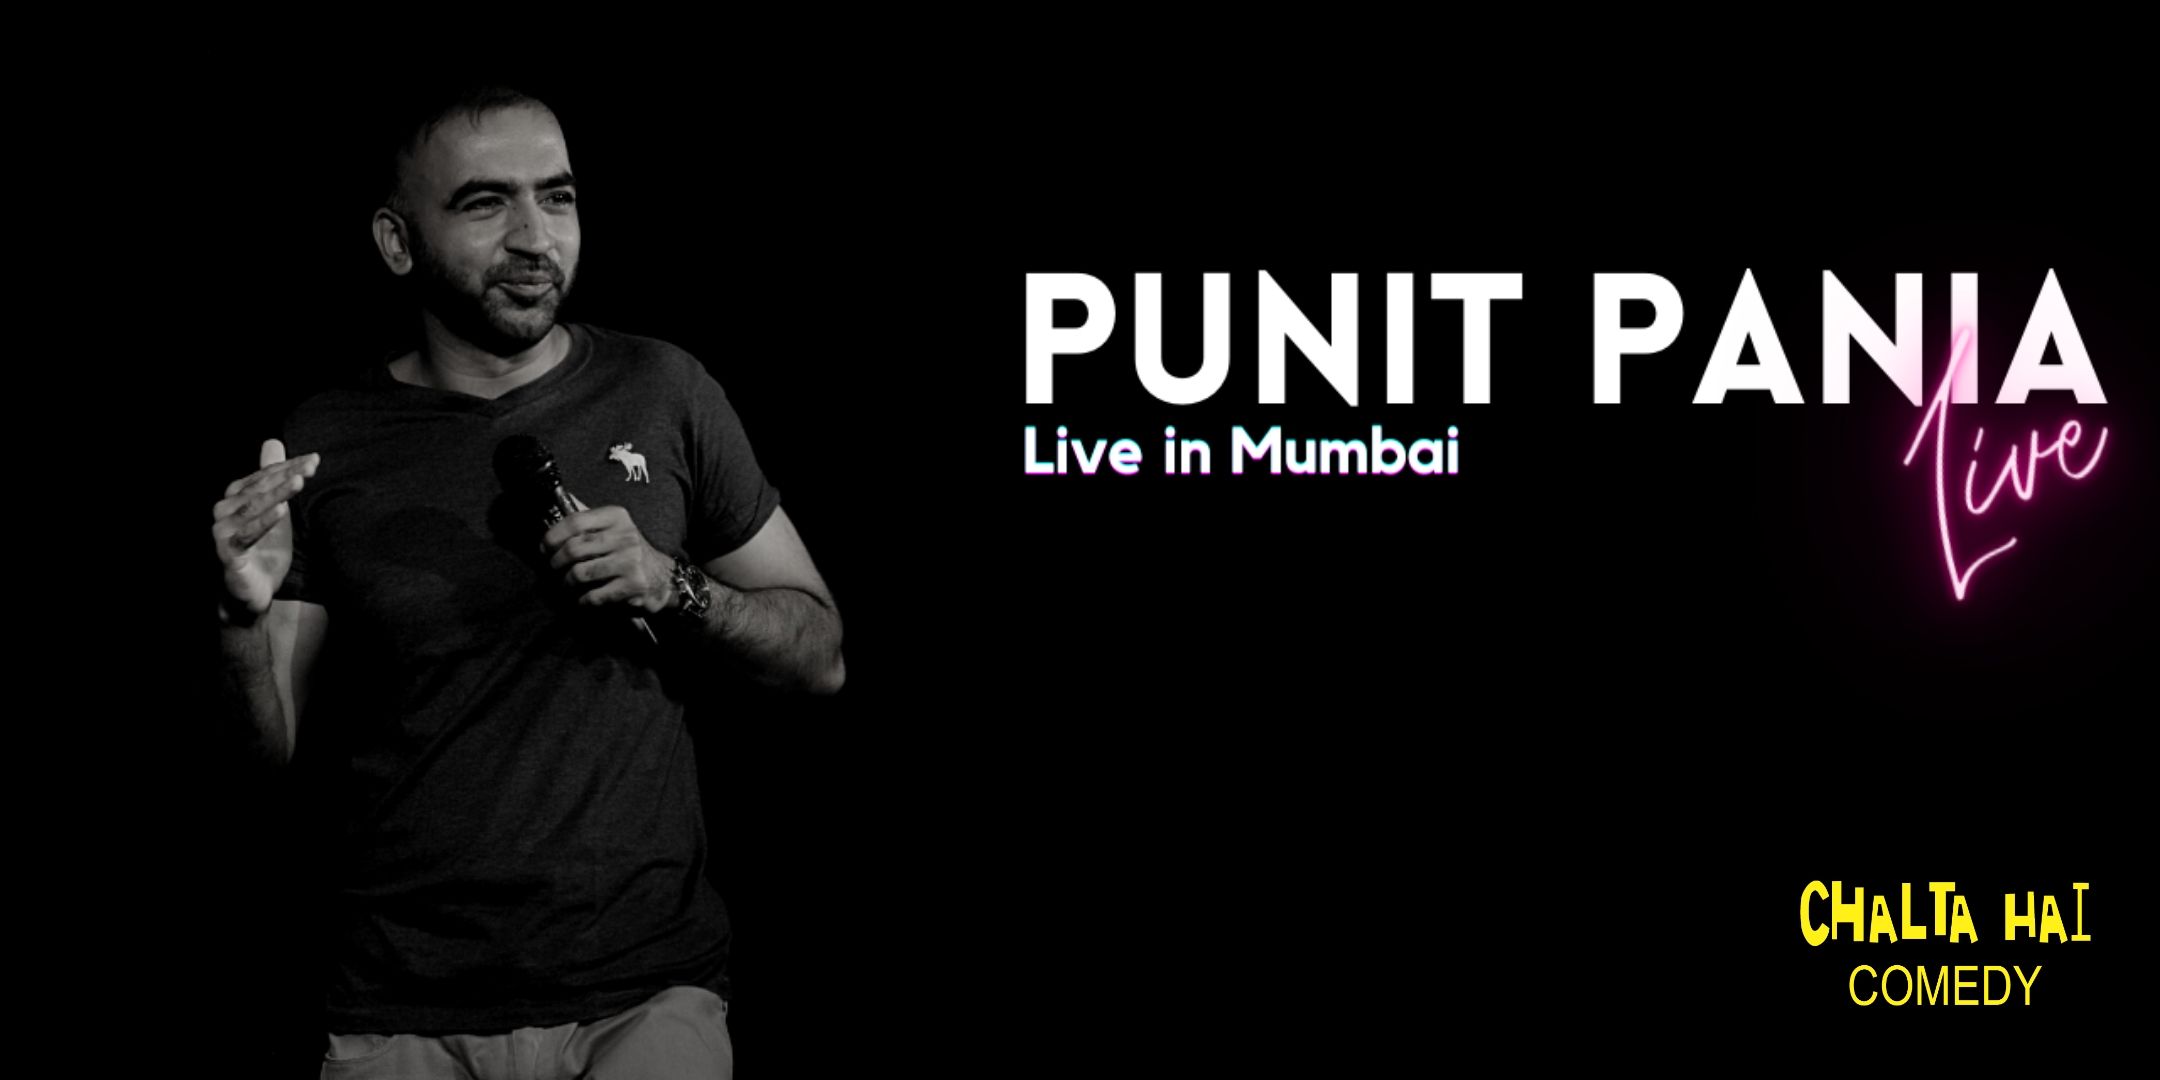 Punit Pania Live in Mumbai on December 31, 2021